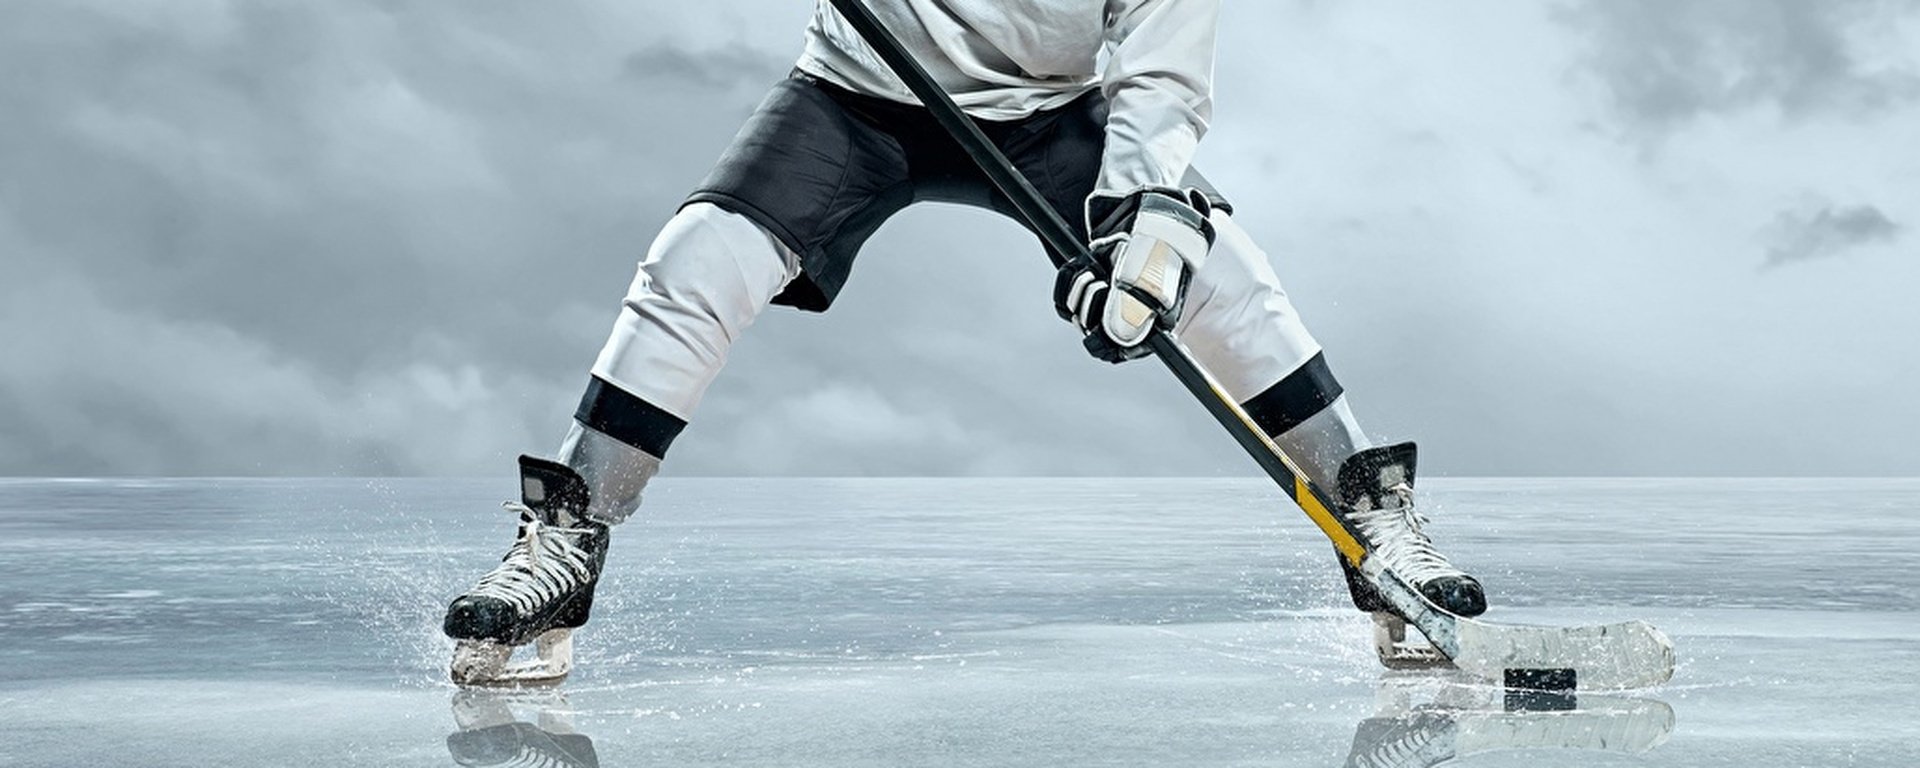 Ice hockey skate. Коньки на льду. Клюшка на льду. Хоккей коньки на льду. Хоккейная клюшка на льду.